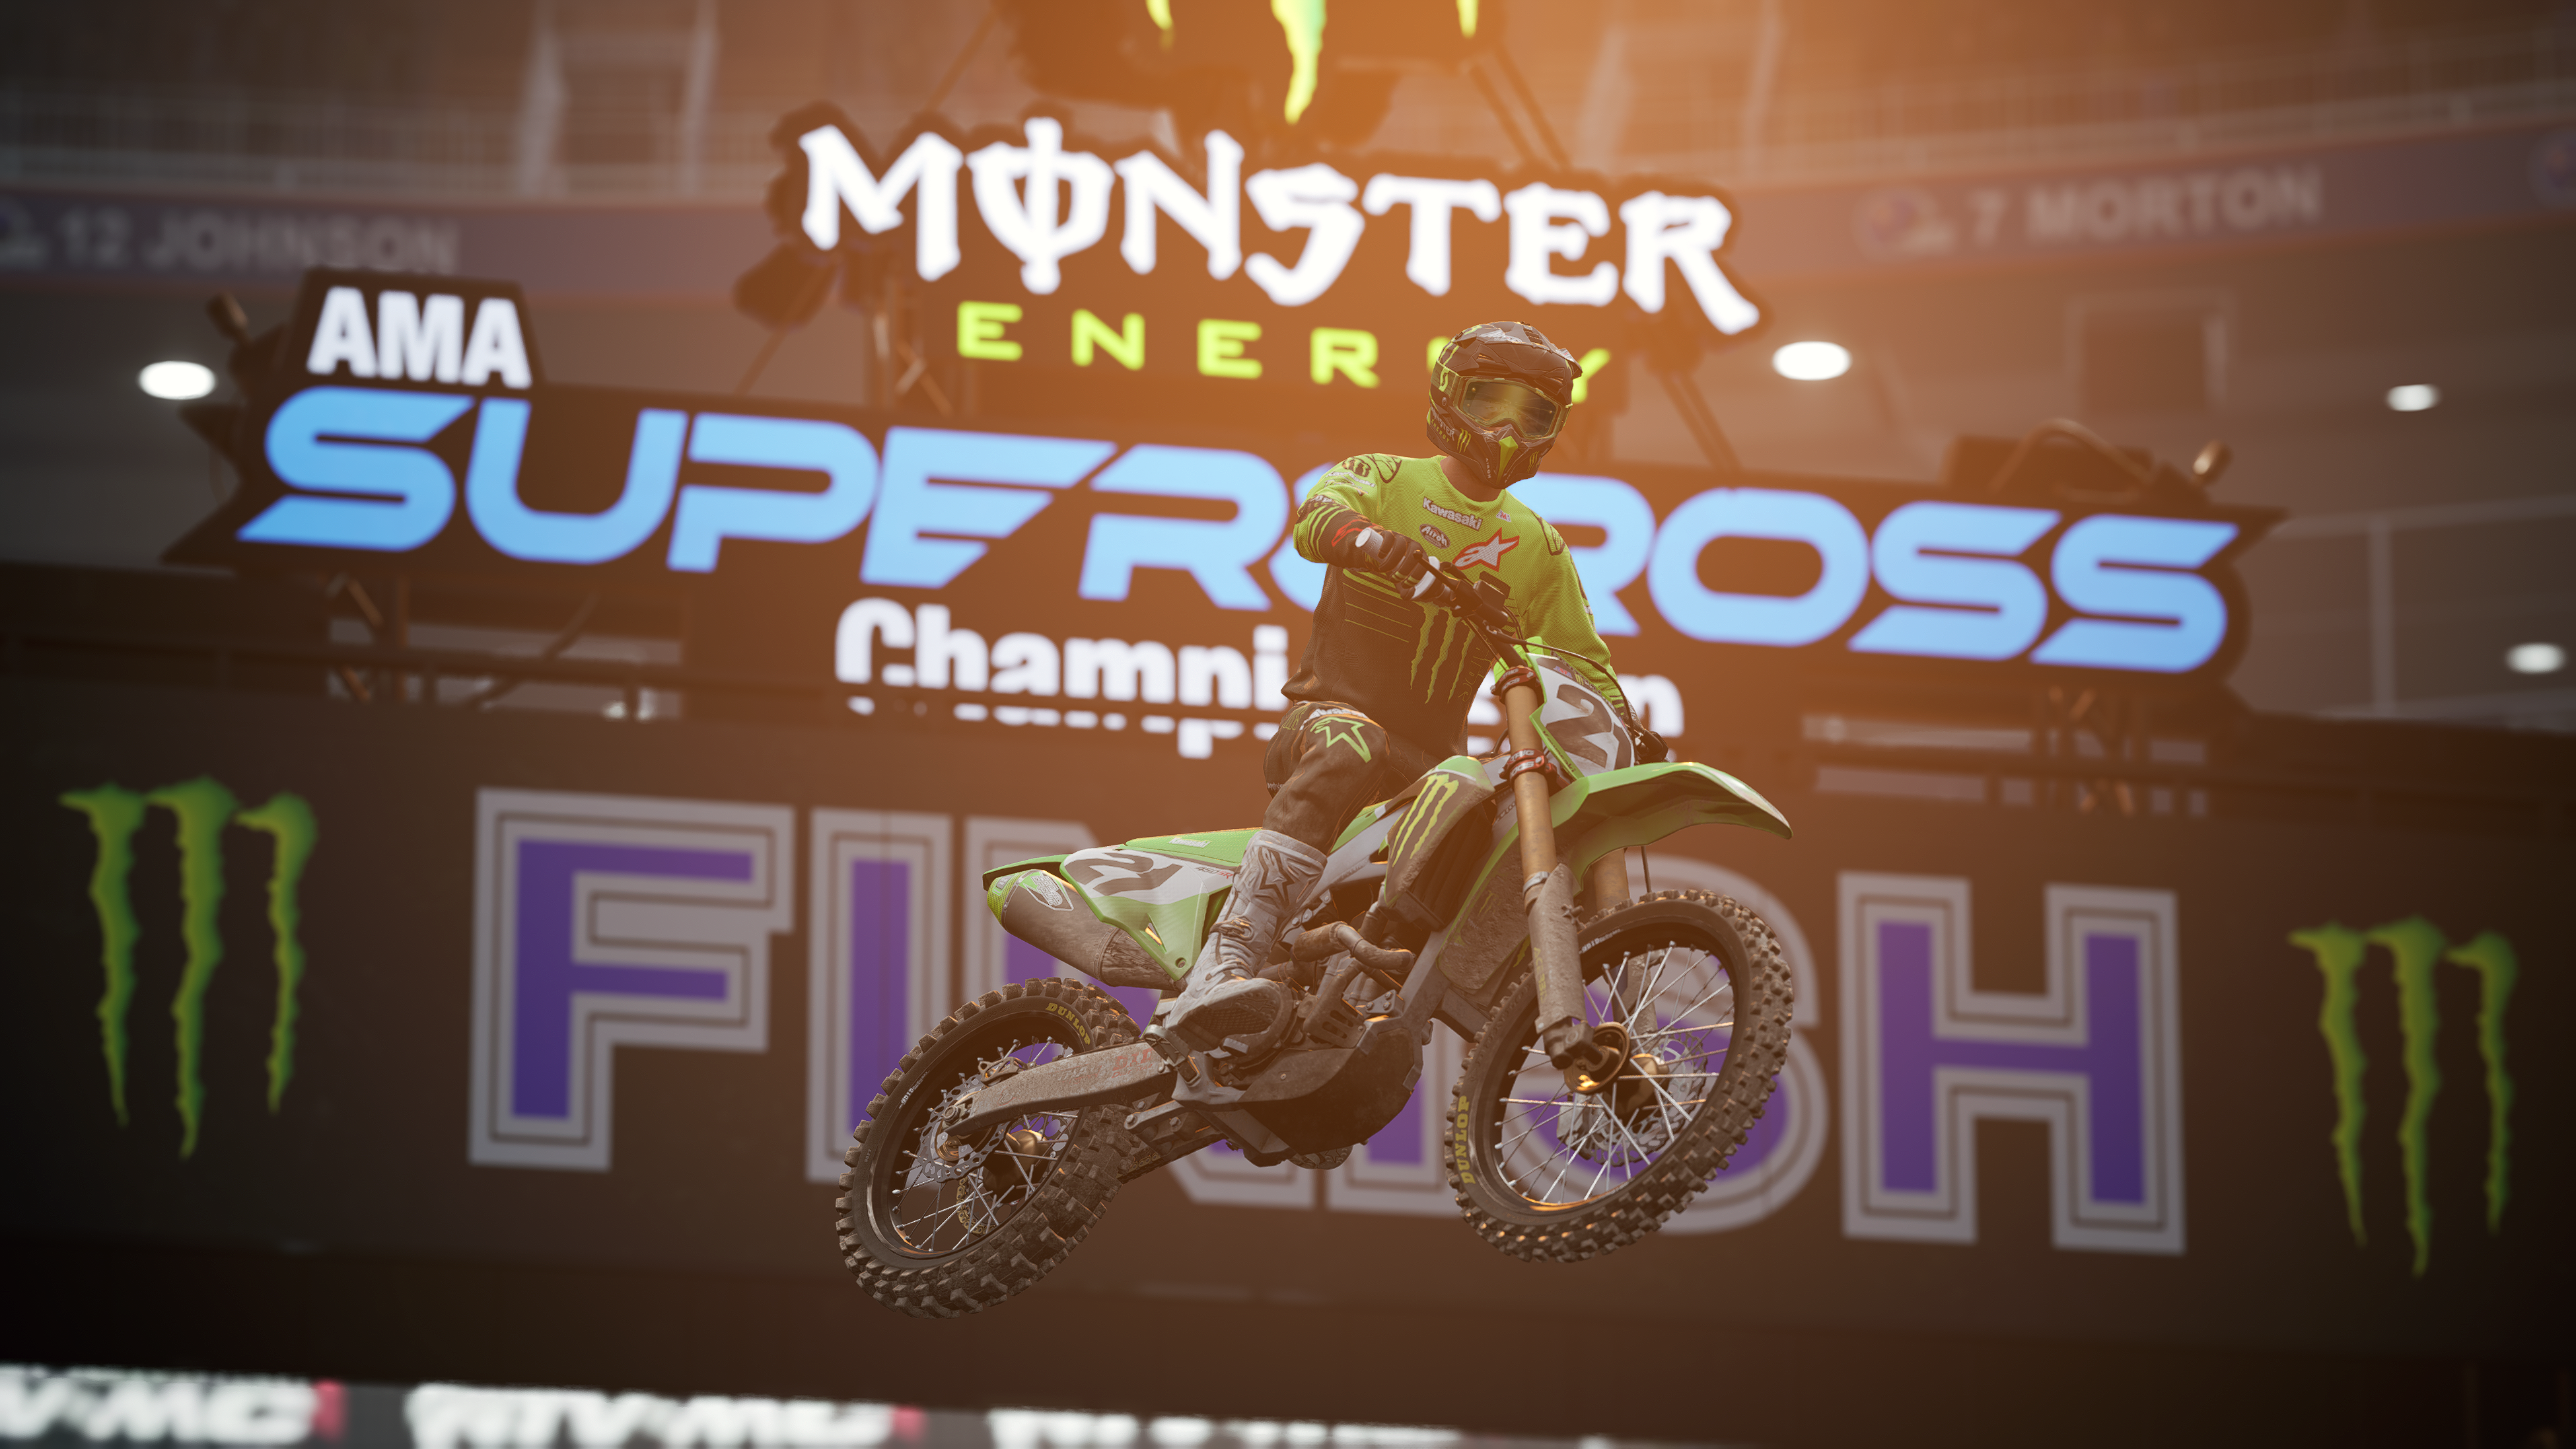 Supercross & Motocross on Instagram: “Who will win the SX